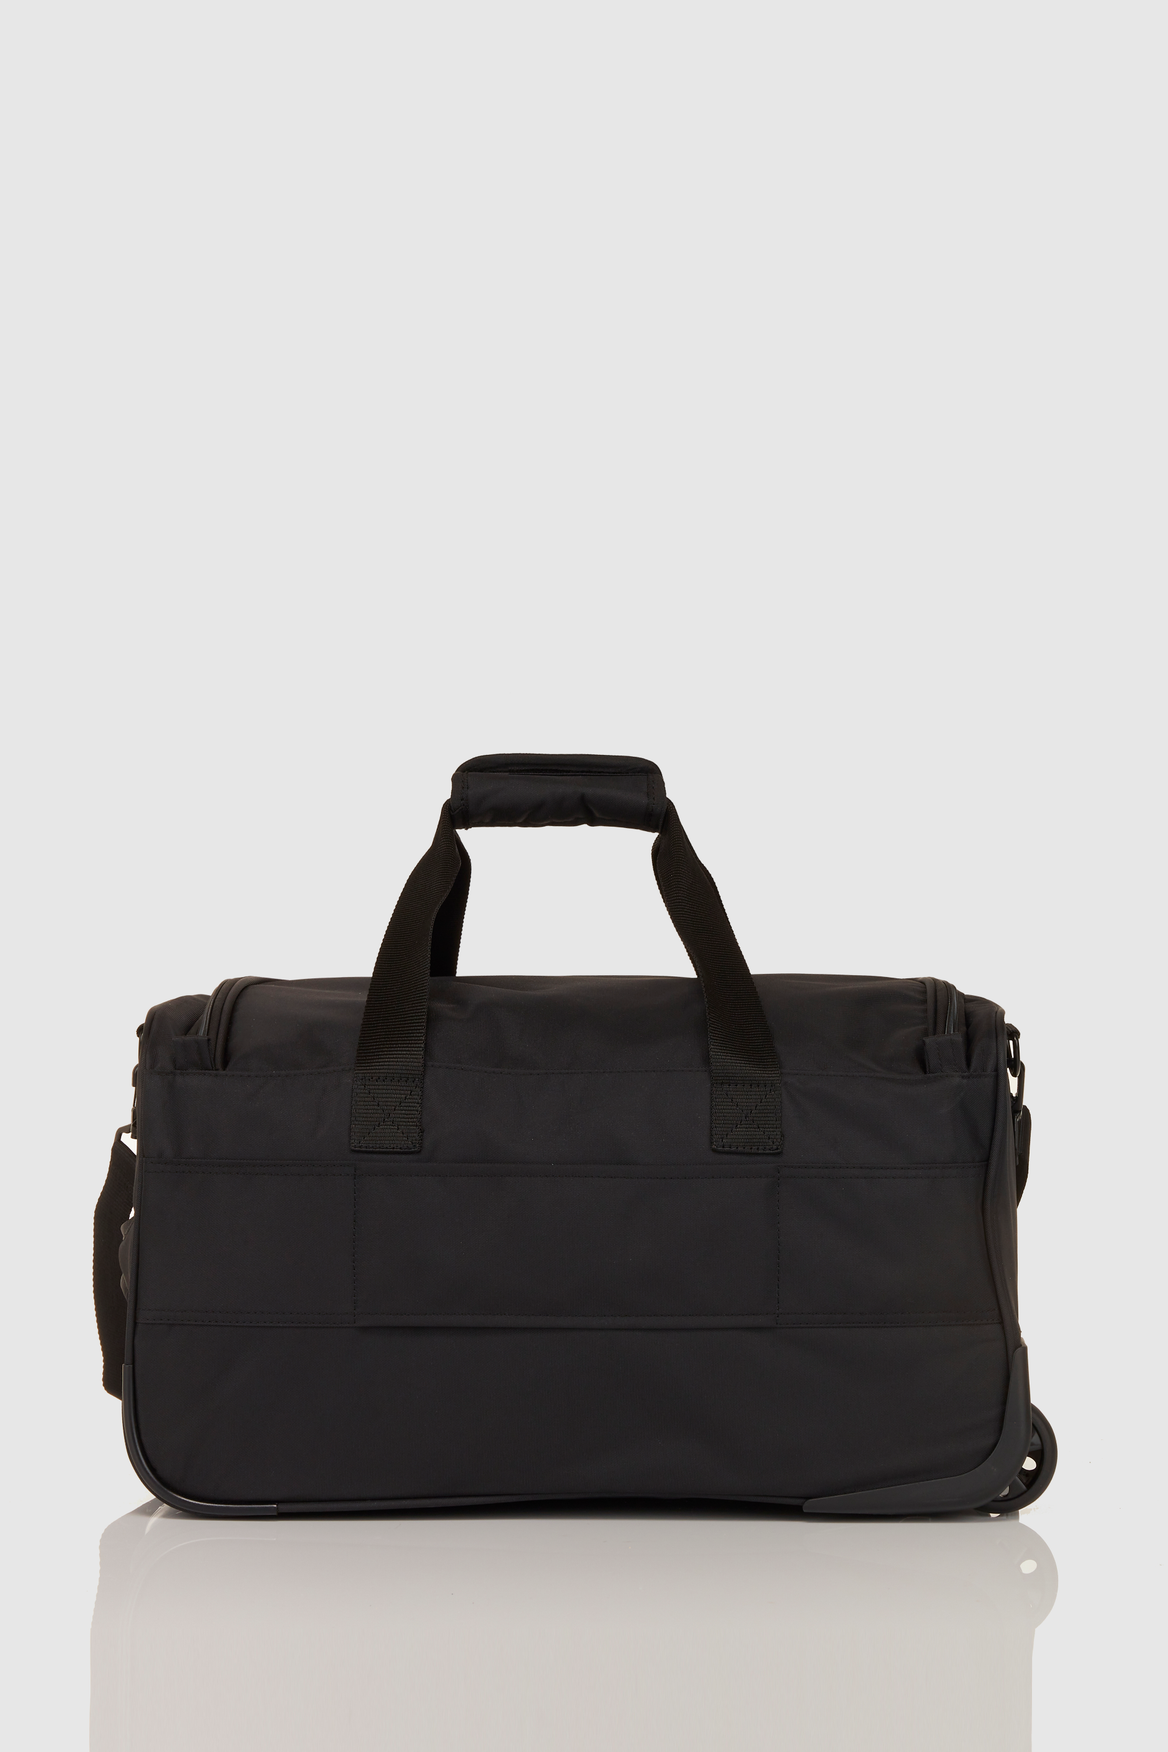 Nere Stori 52cm Wheel Duffle Bag – Strandbags Australia